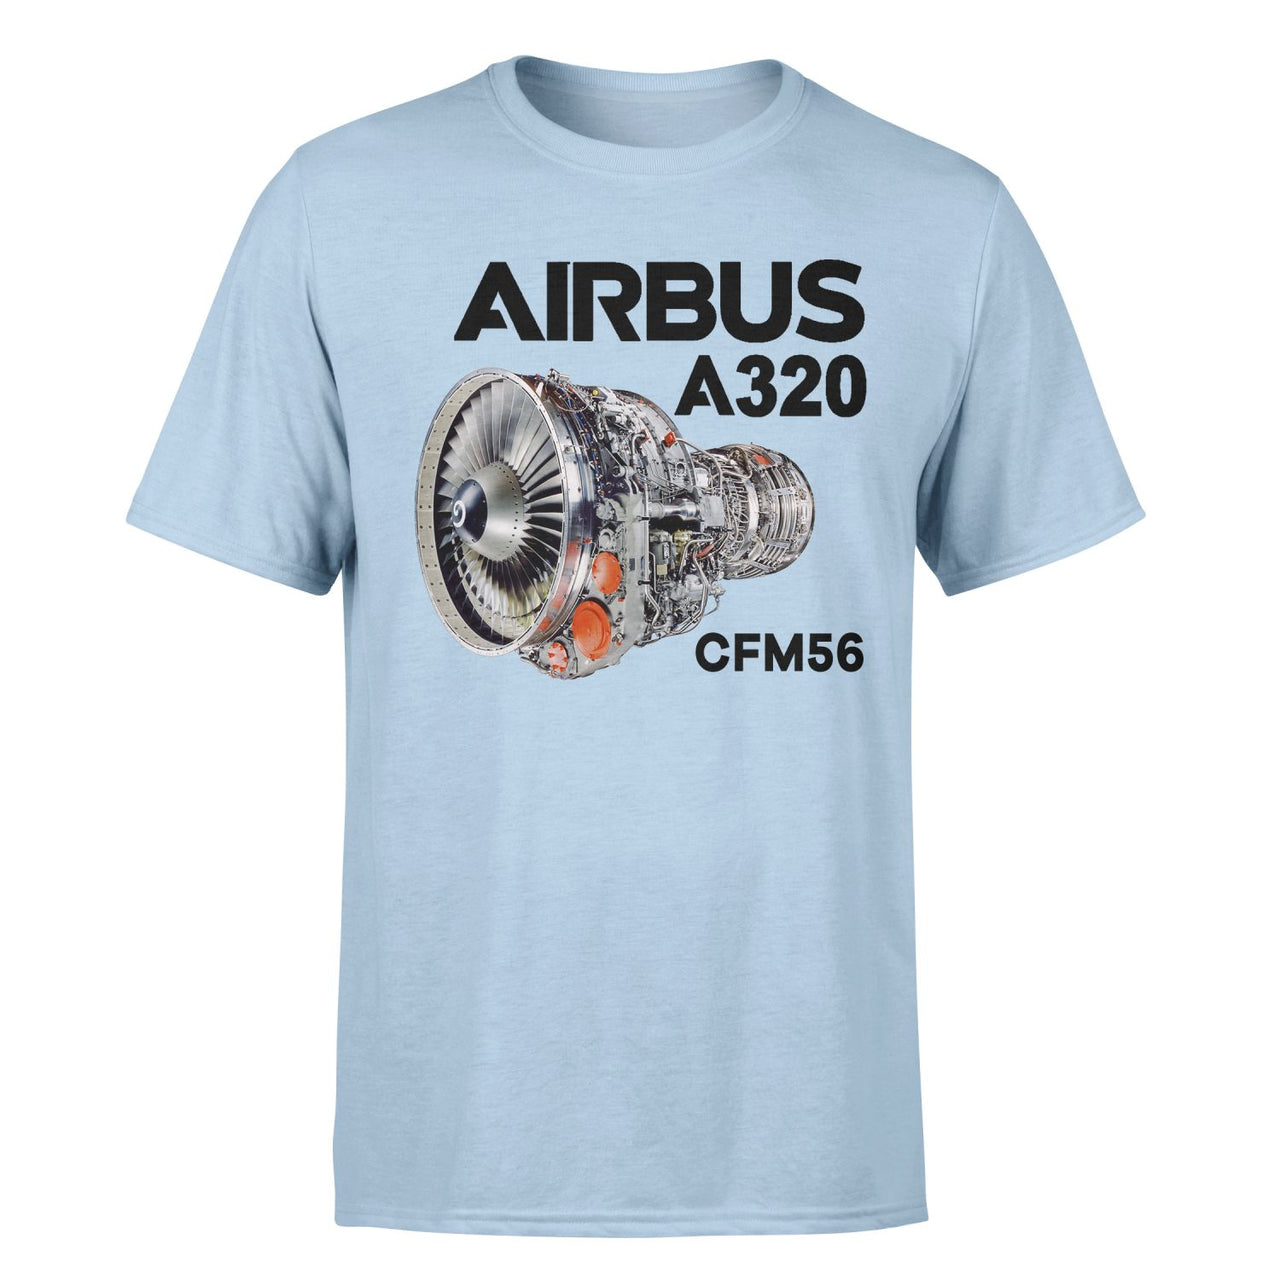 Airbus A320 & CFM56 Engine Designed T-Shirts